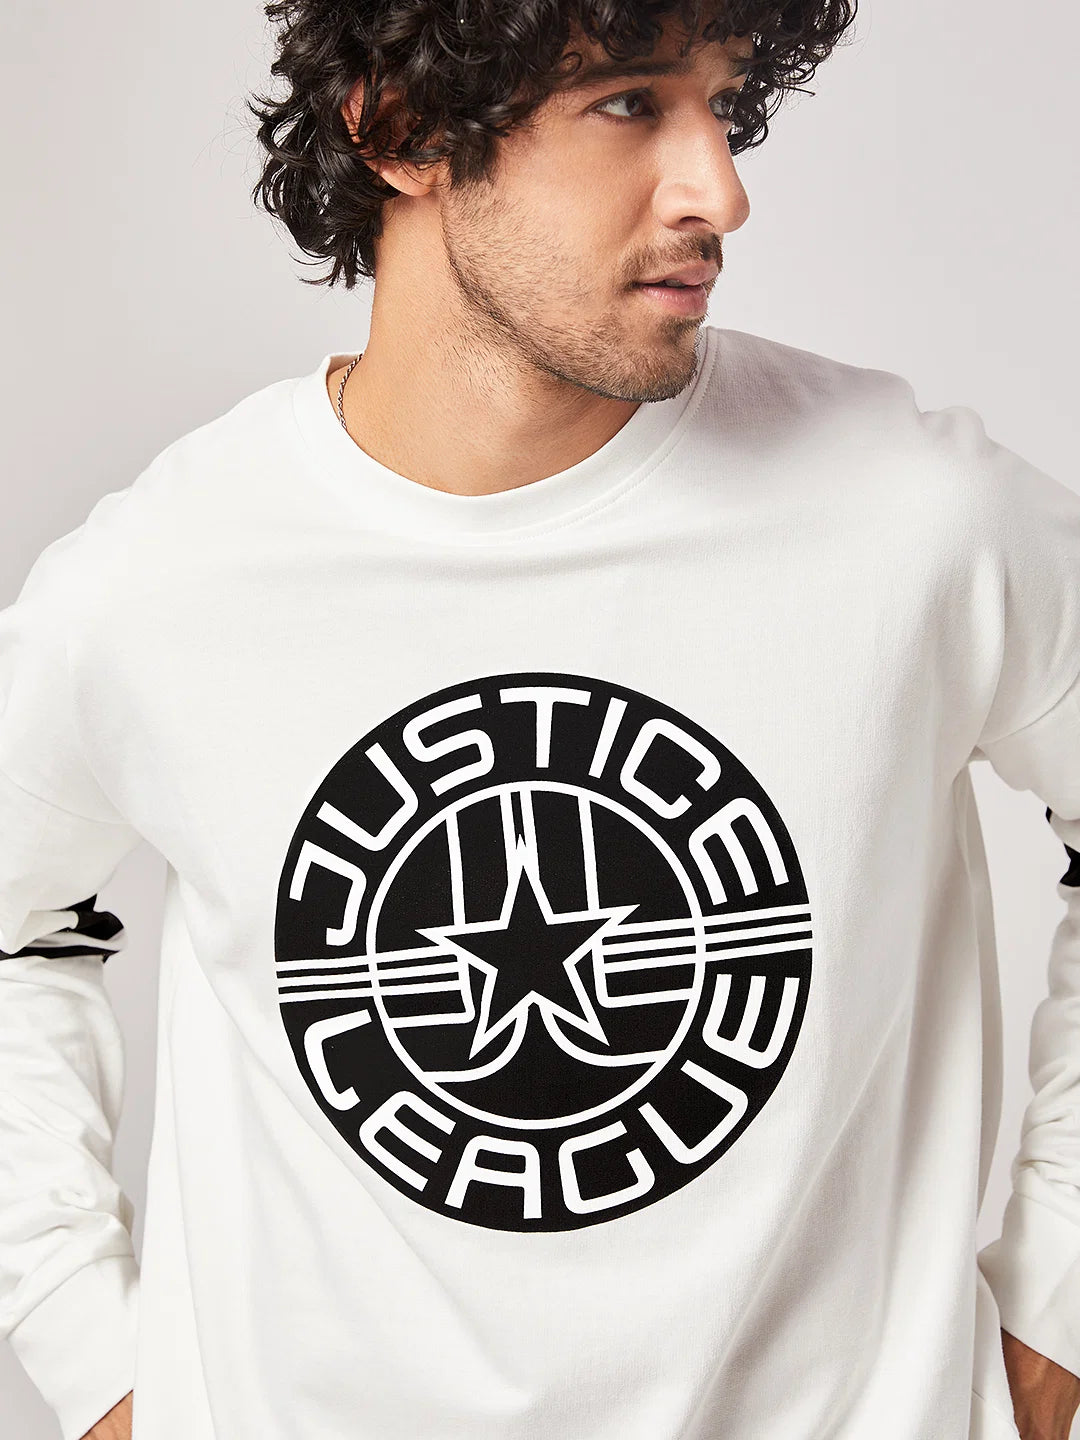 Justice League Classic Logo (UK version)